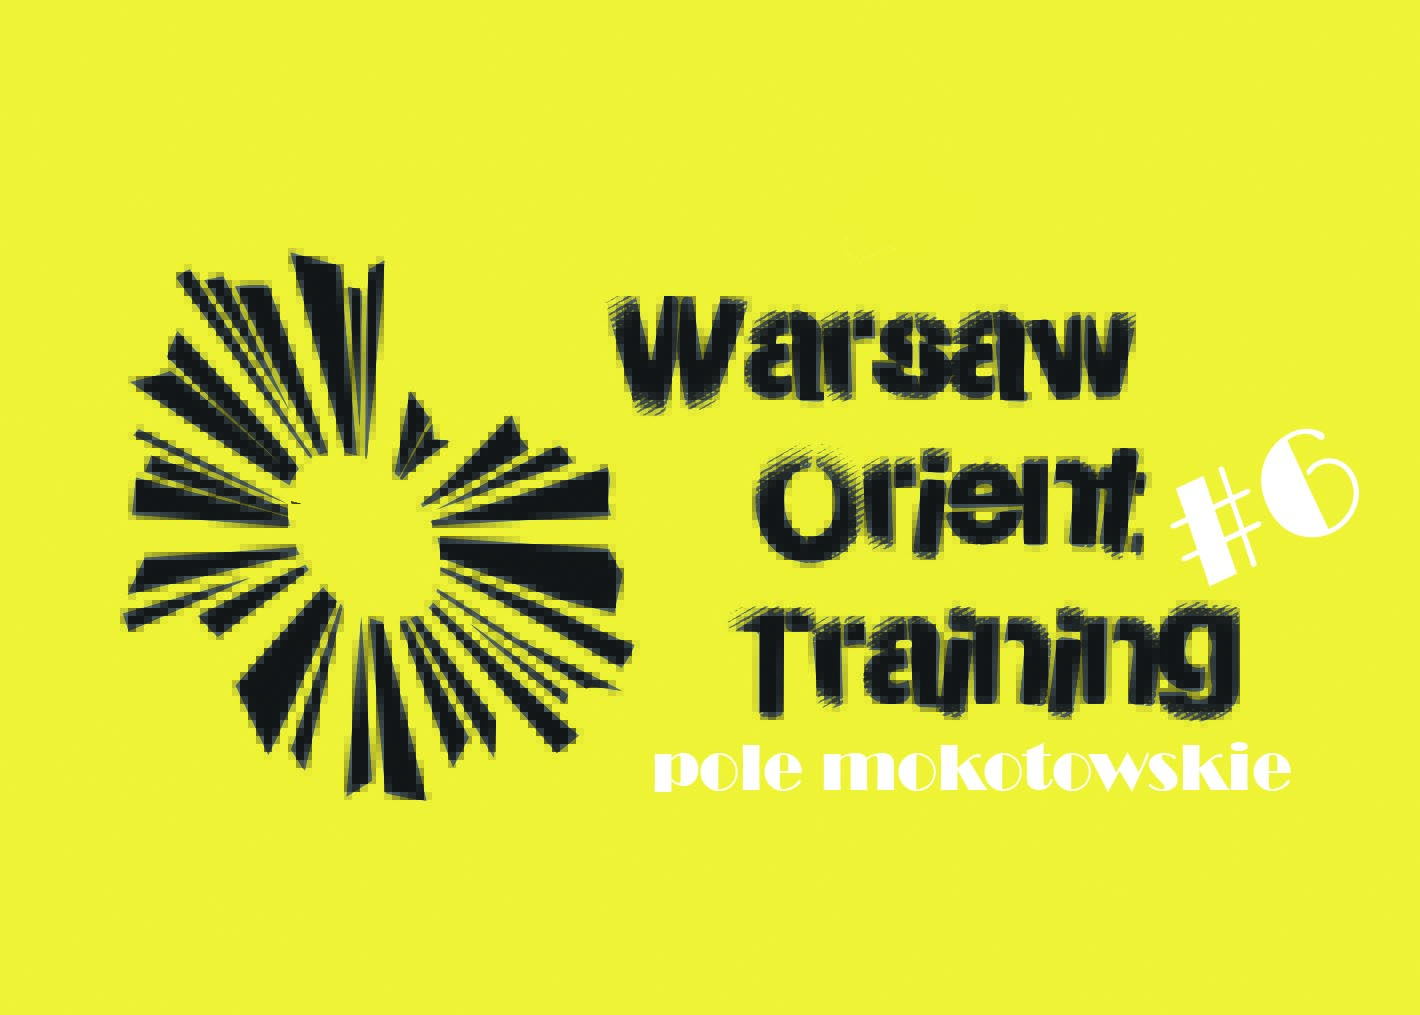 Warsaw Orient Training #6 - Pole Mokotowskie